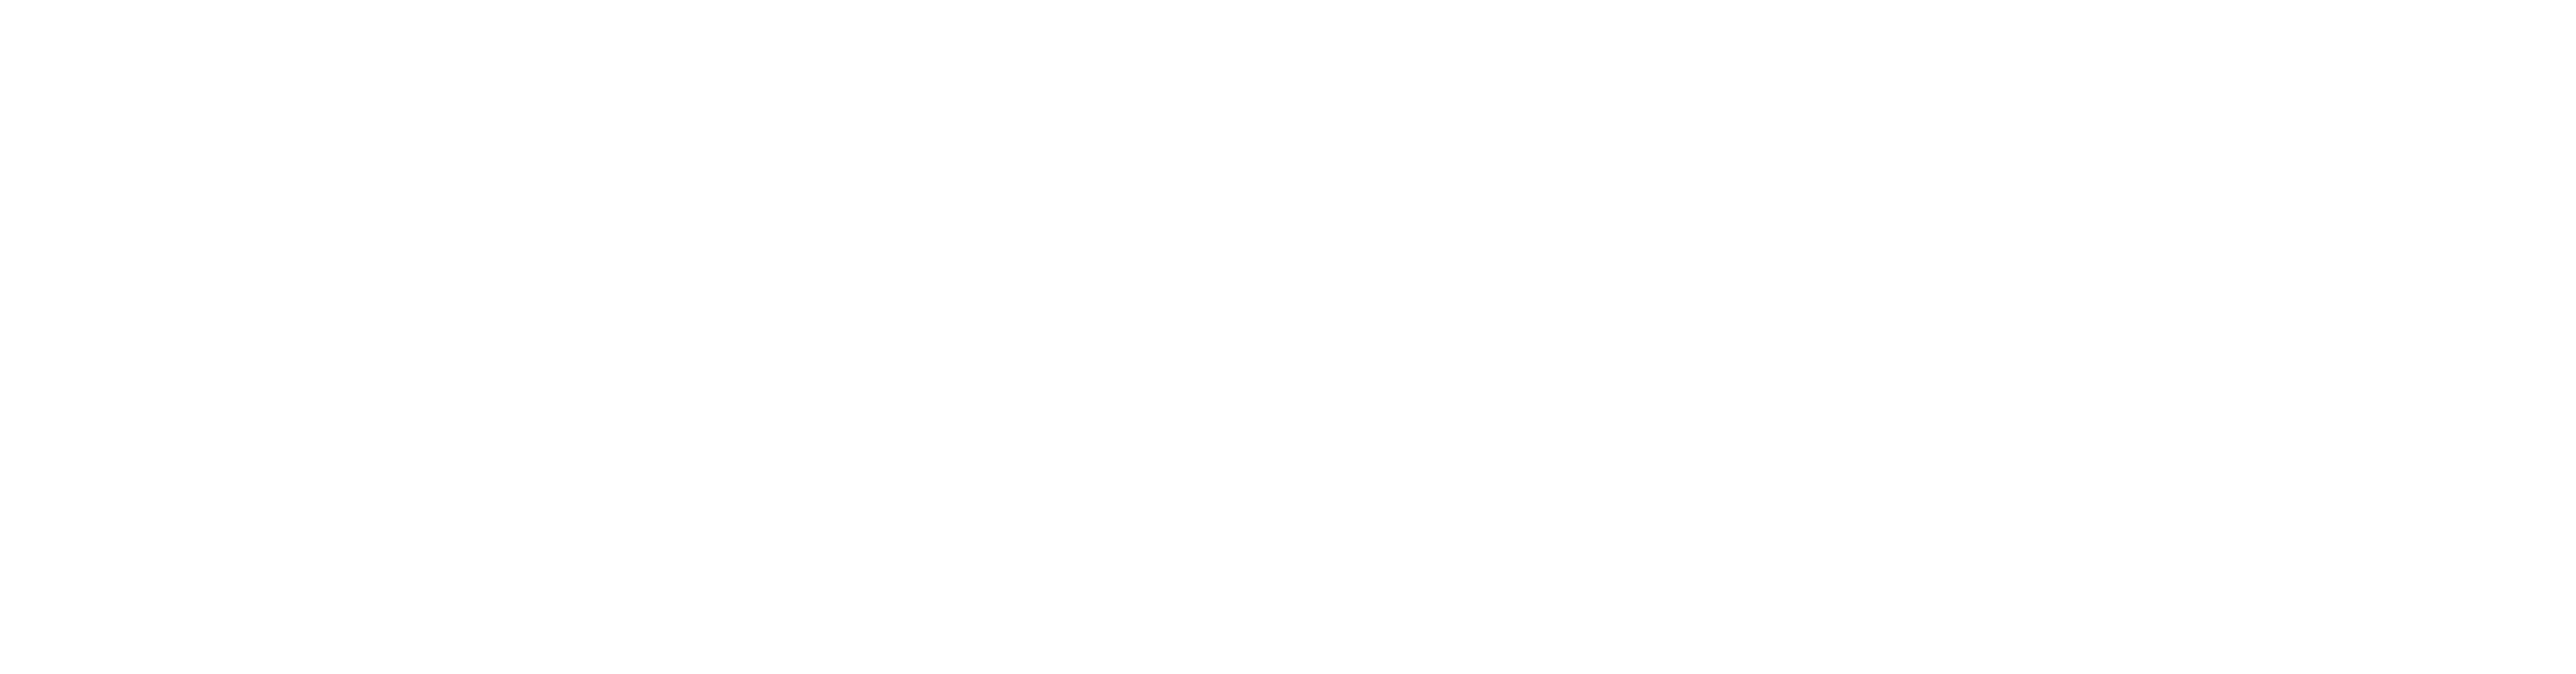 More Than Words logo design - dark tagline horizontal